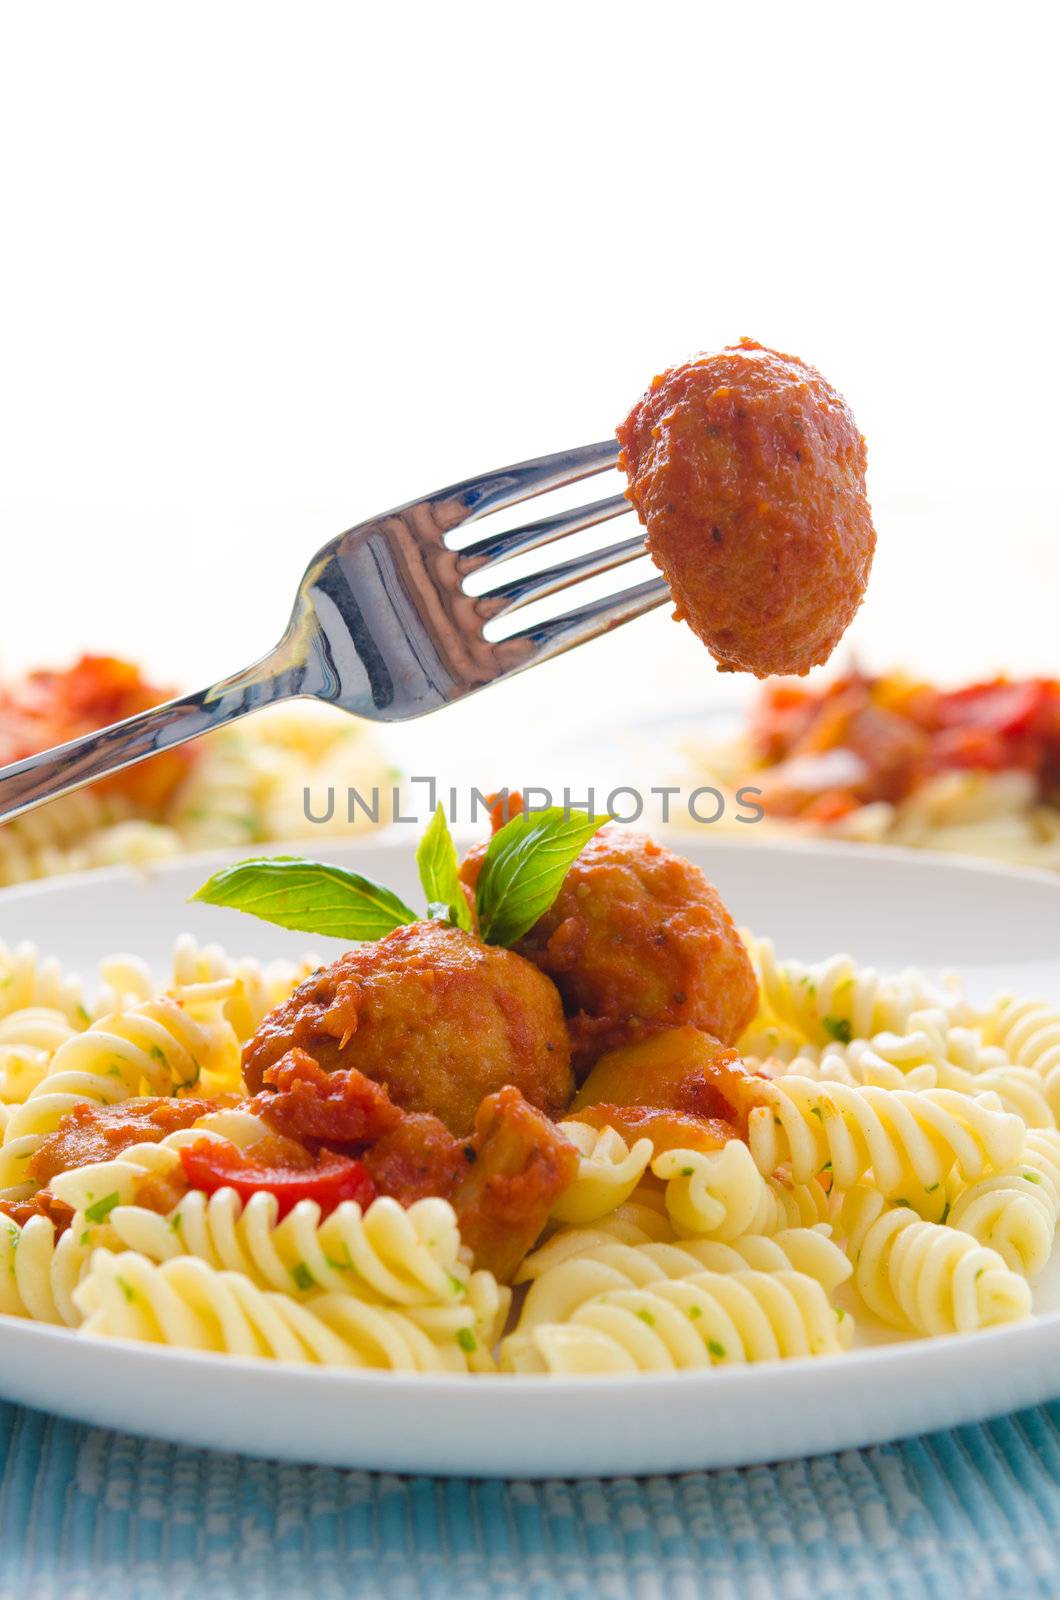 spaghetti bolognese by yuliang11